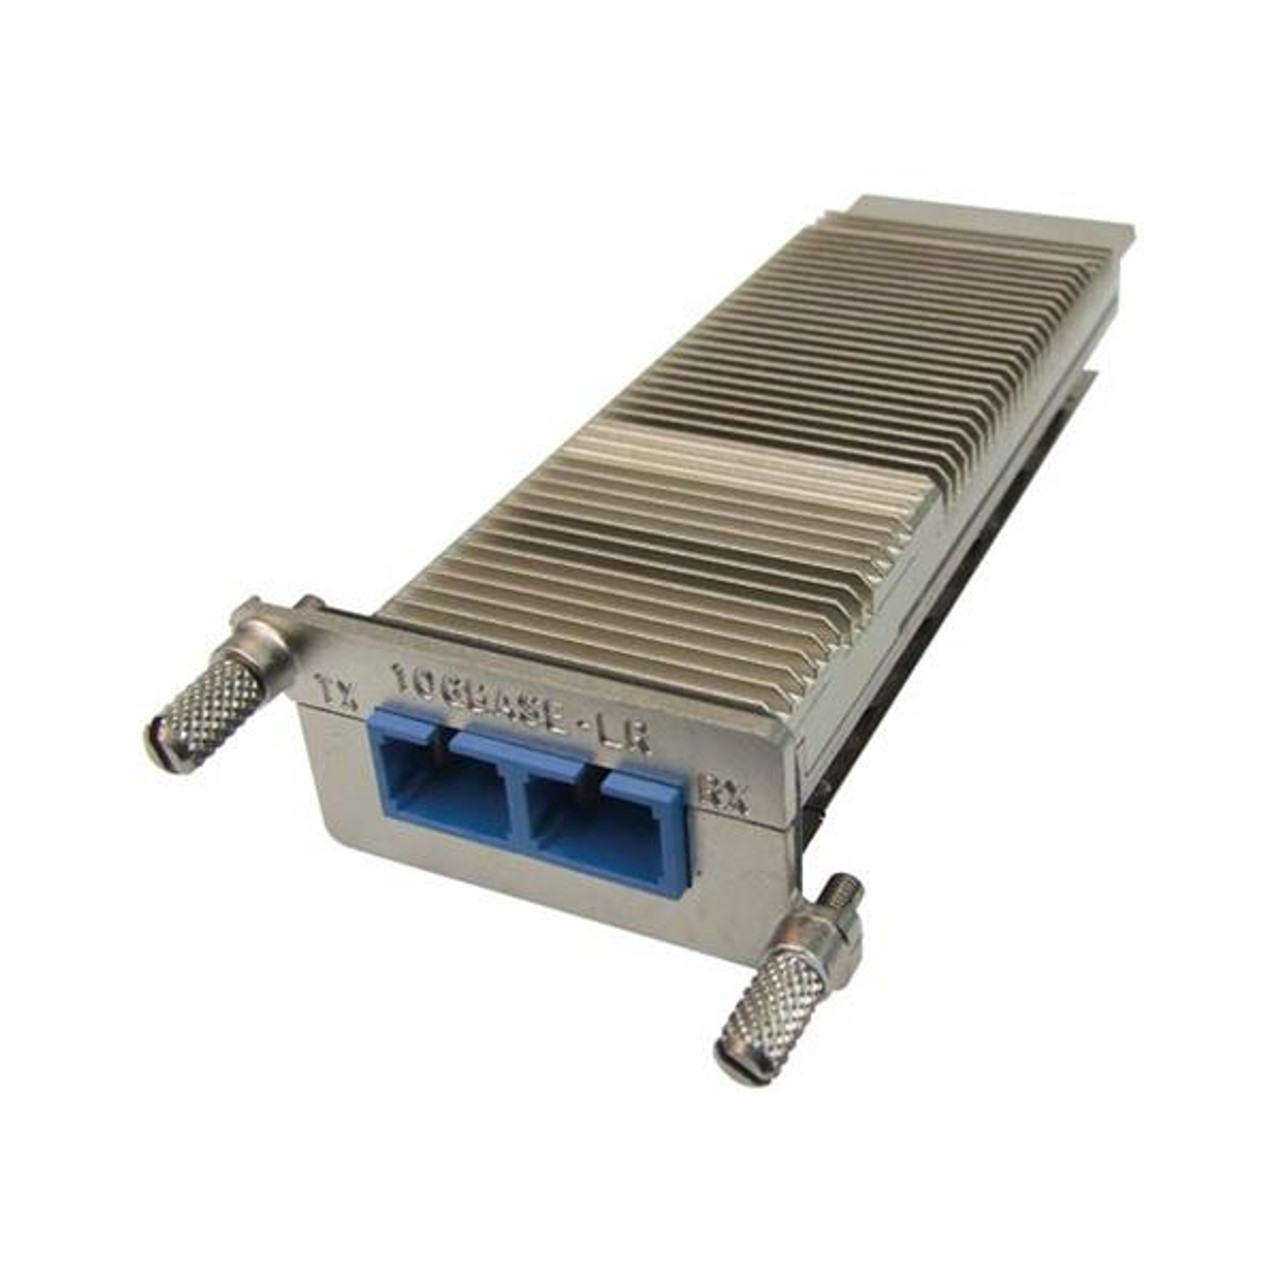 XENPAK-10GB-LRM-ACC Accortec 10Gbps 10GBase-LRM Multi-mode Fiber 220m 1310nm Duplex SC Connector XENPAK Transceiver Module for Cisco Compatible